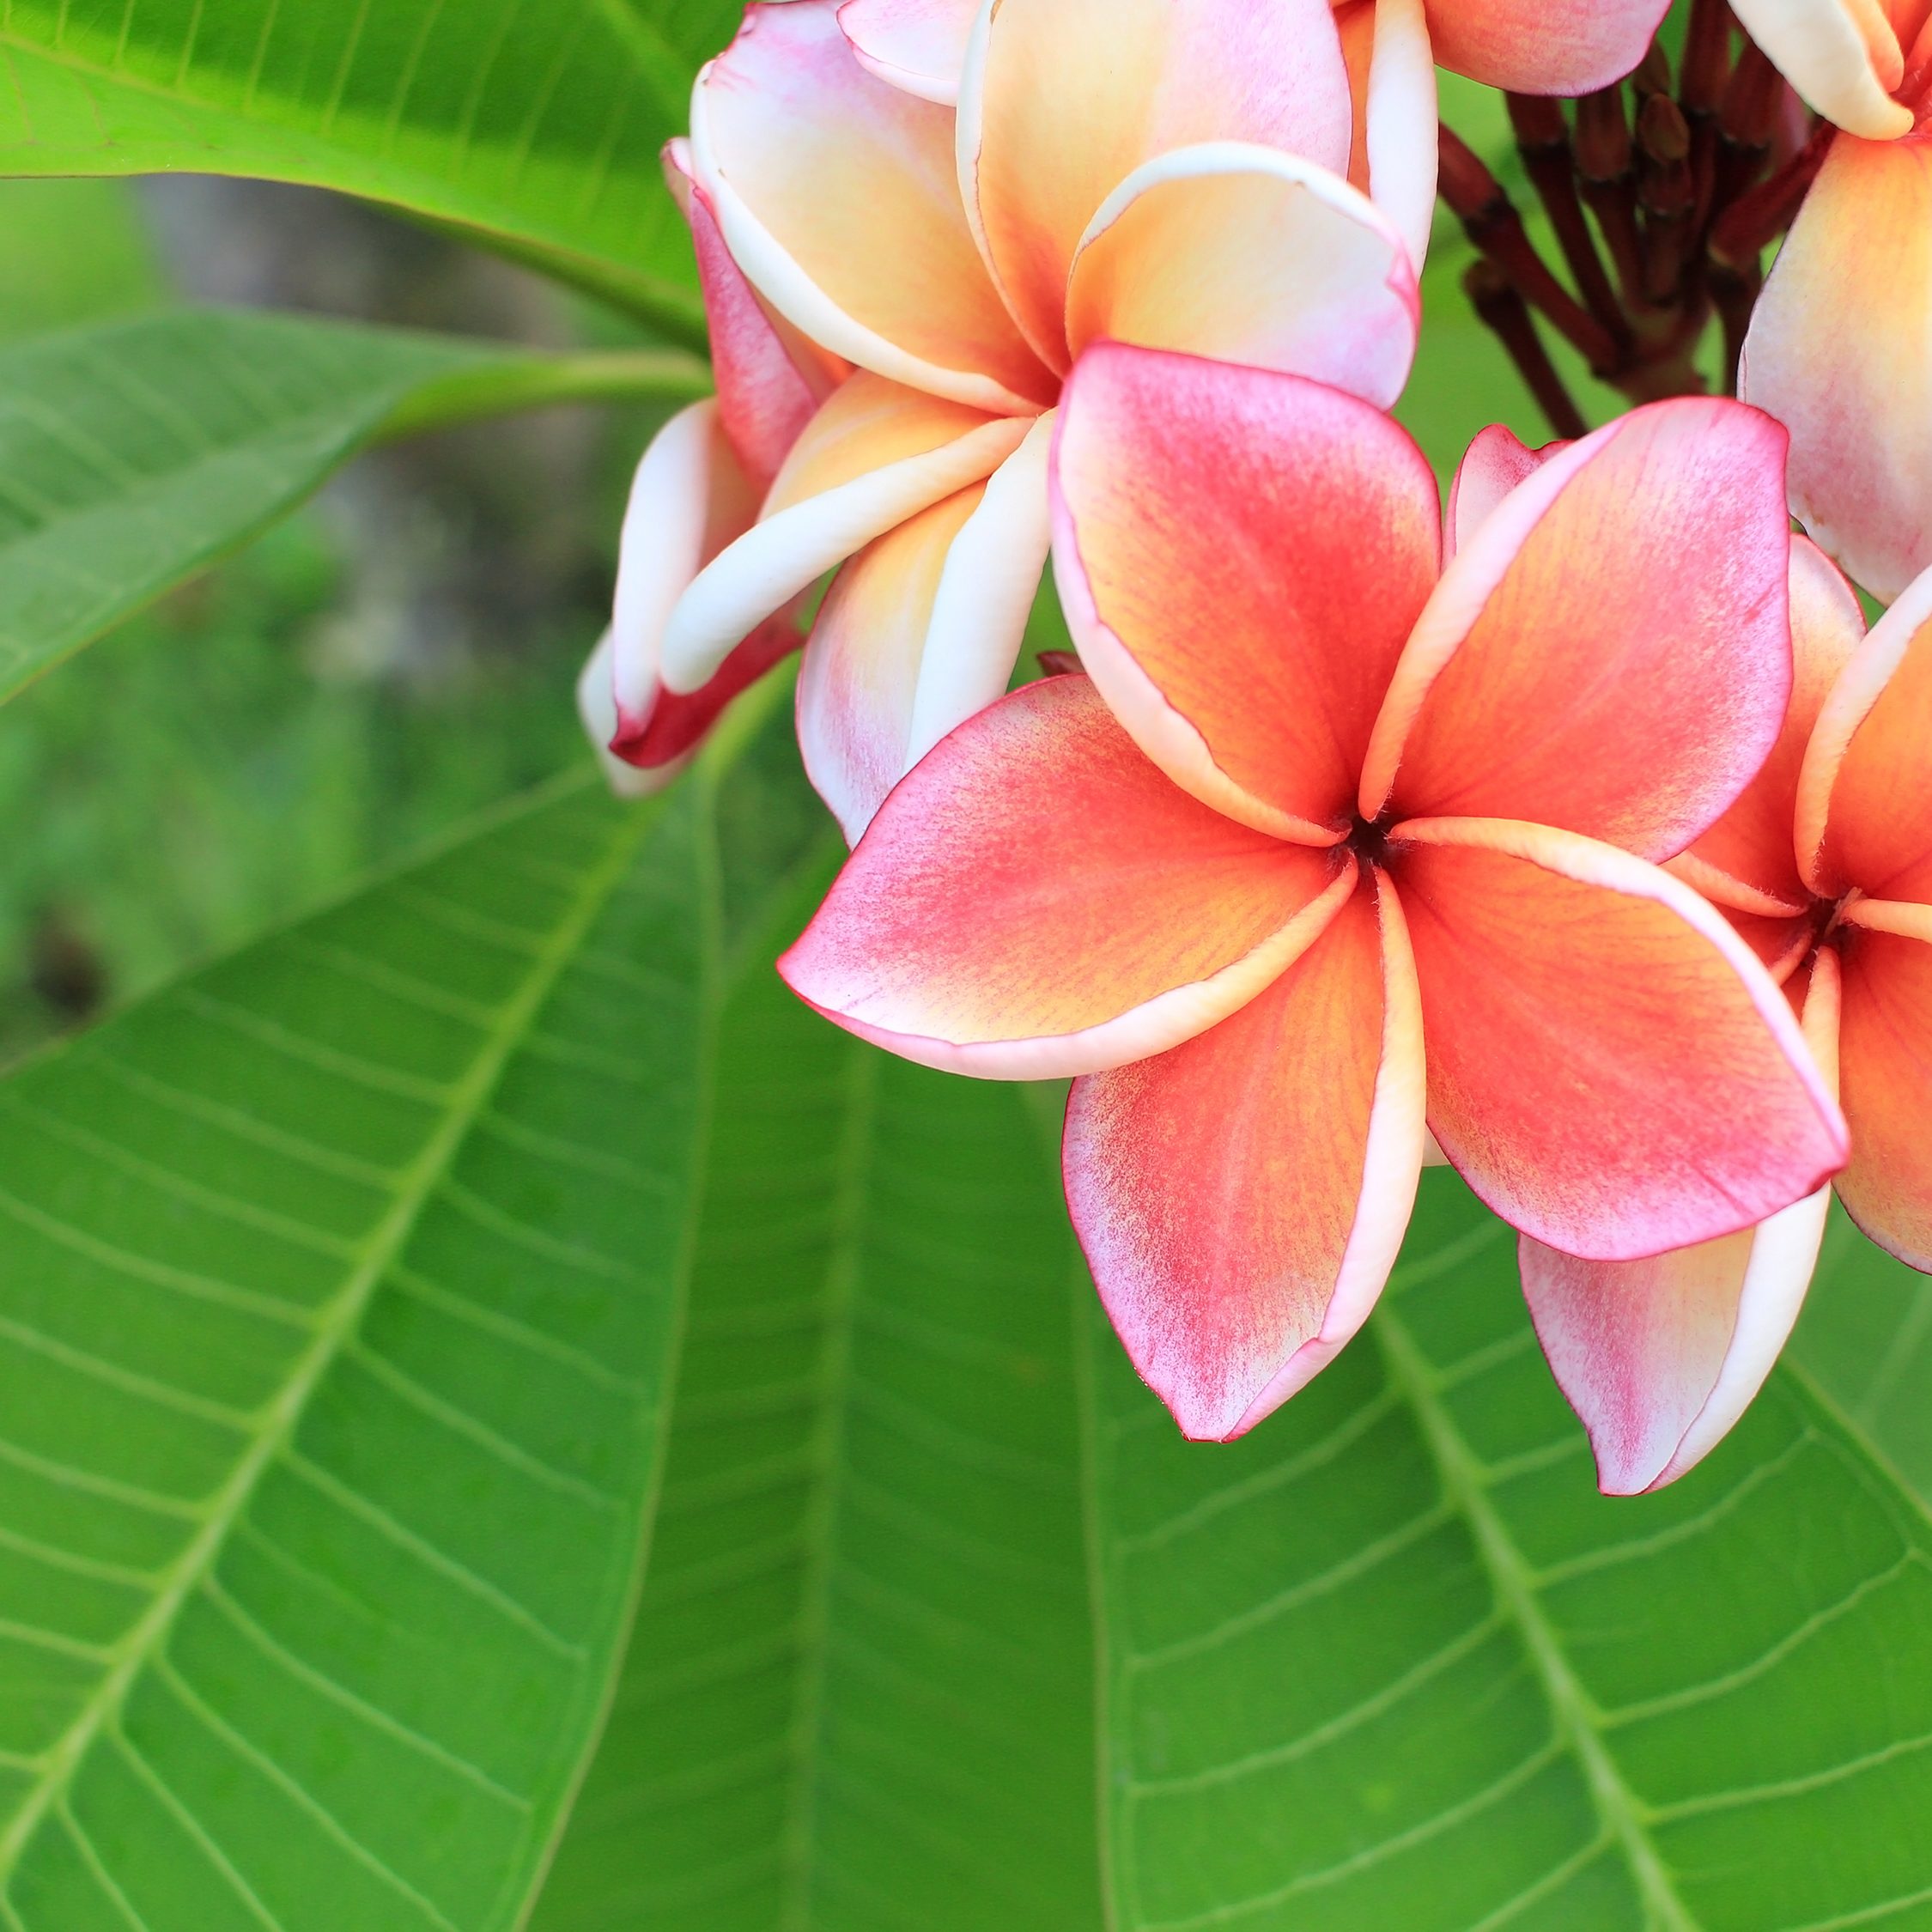 Pink frangipani flower on plant